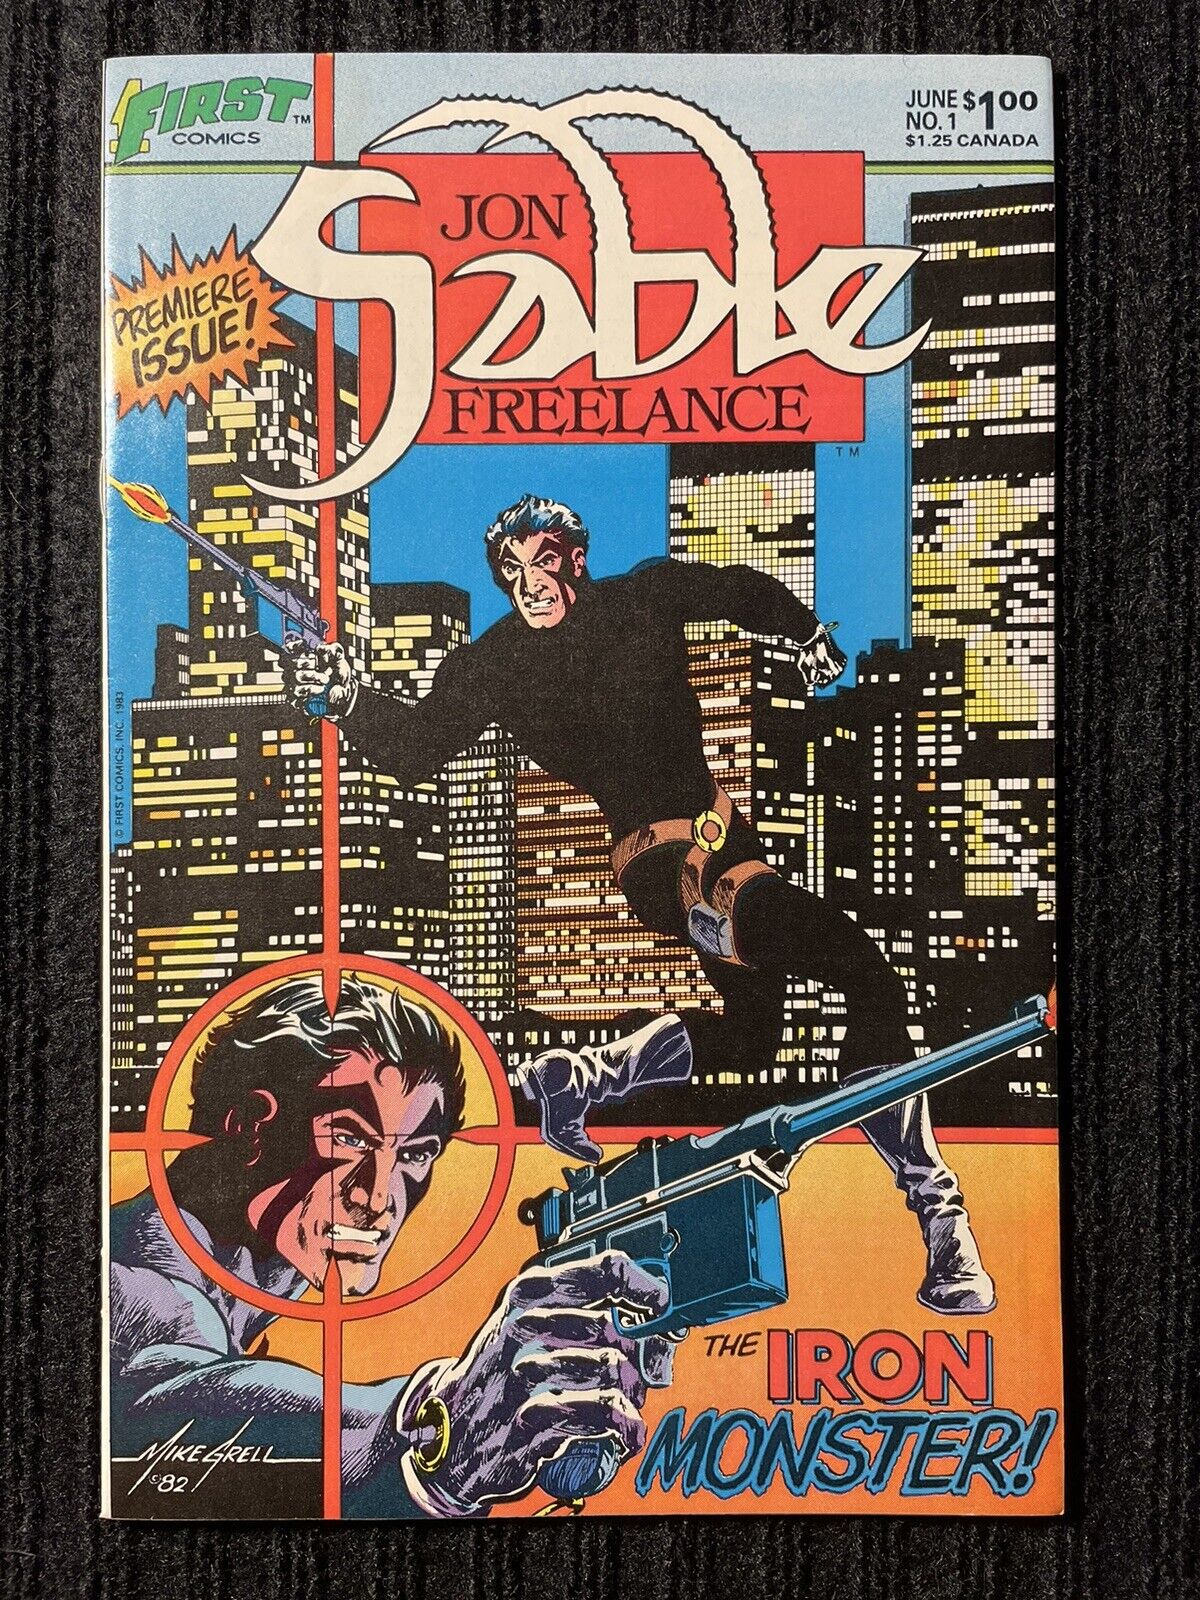 Jon Sable Freelance #1 Mike Grell 1983